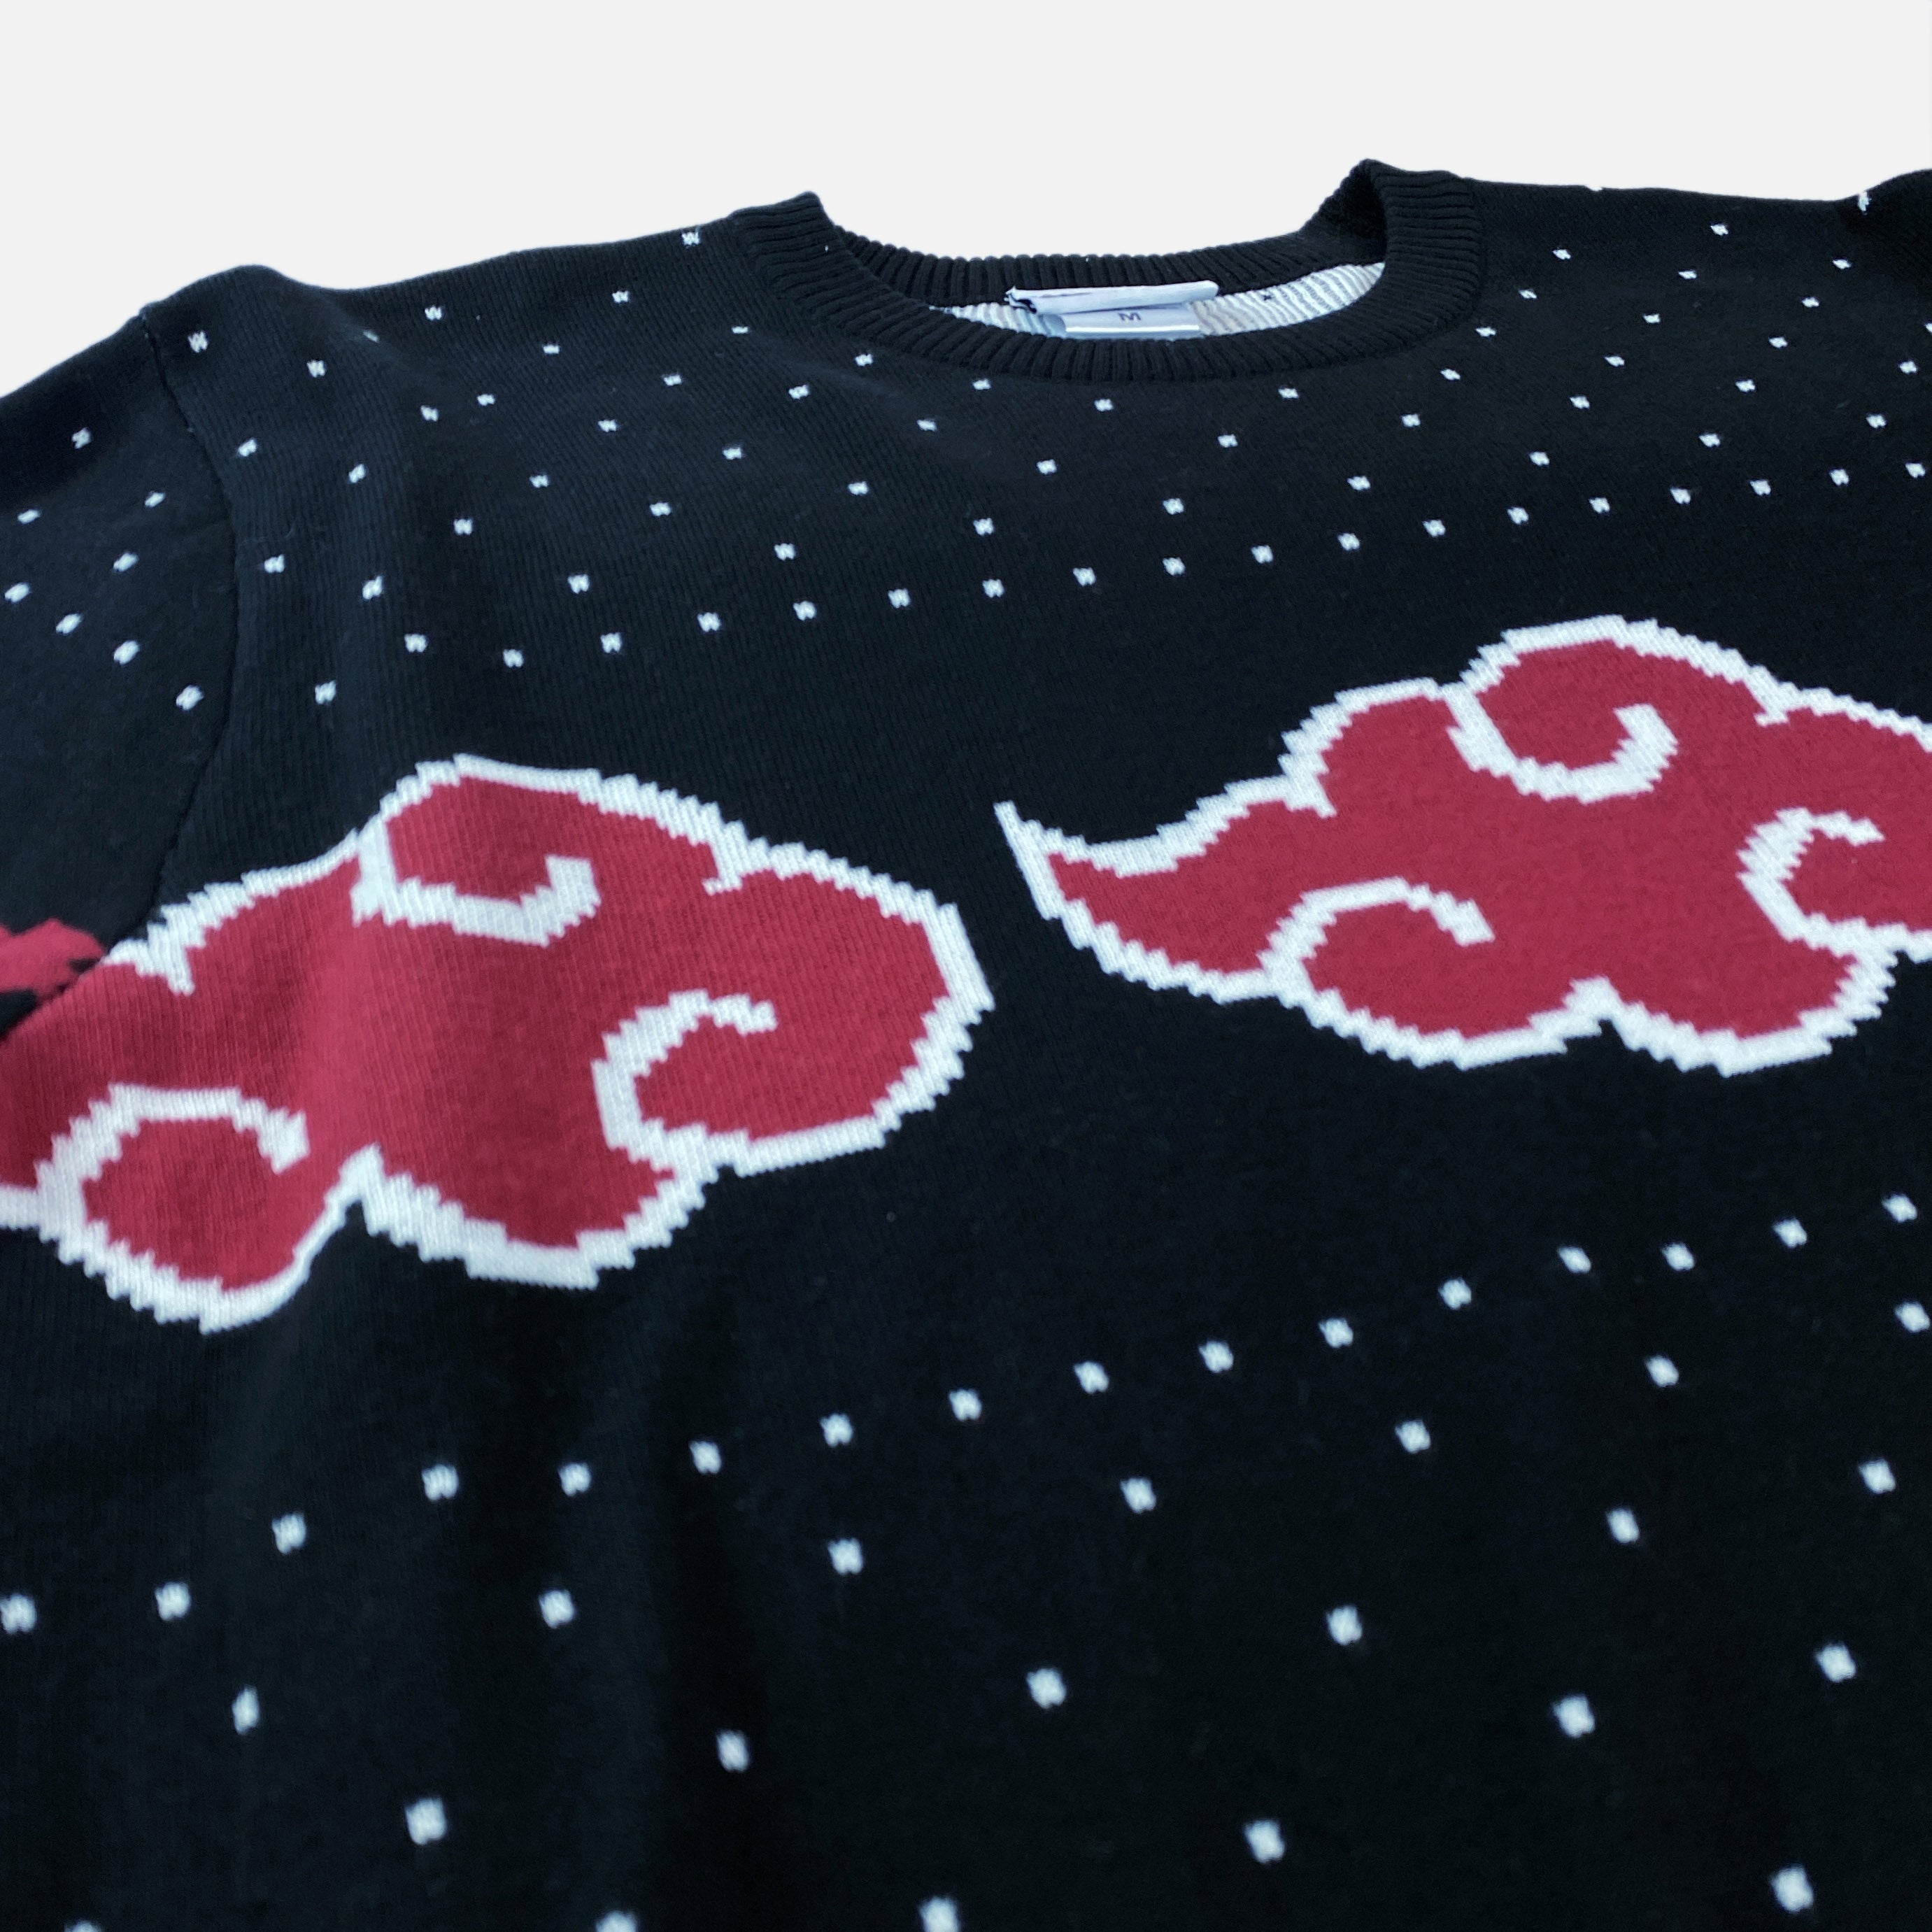 Naruto Shippuden - Akatsuki Cloud Holiday Sweater - Crunchyroll Exclusive! image count 1